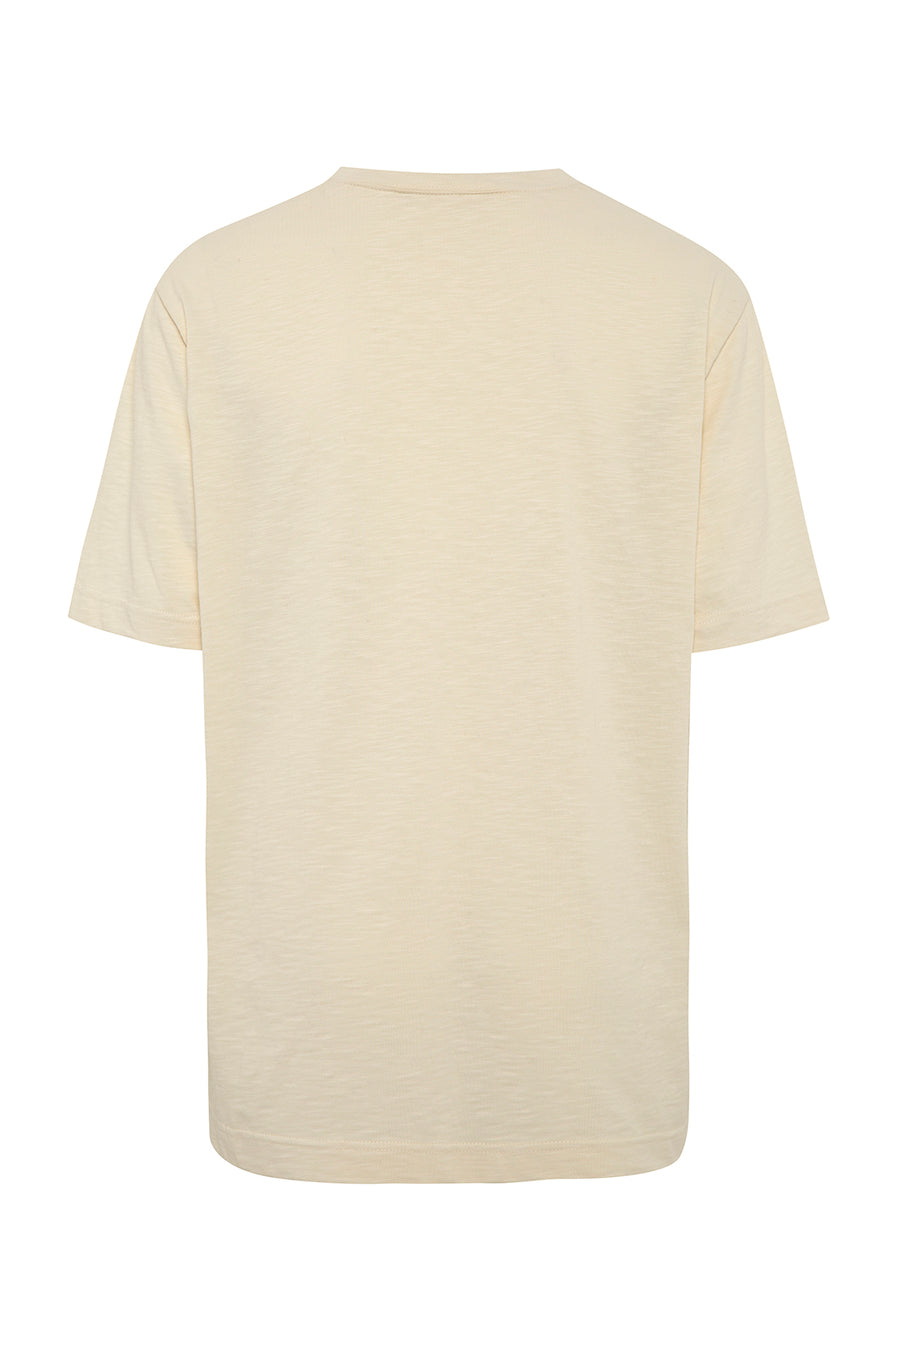 JOEL - Short sleeve t-shirt with rhinestones